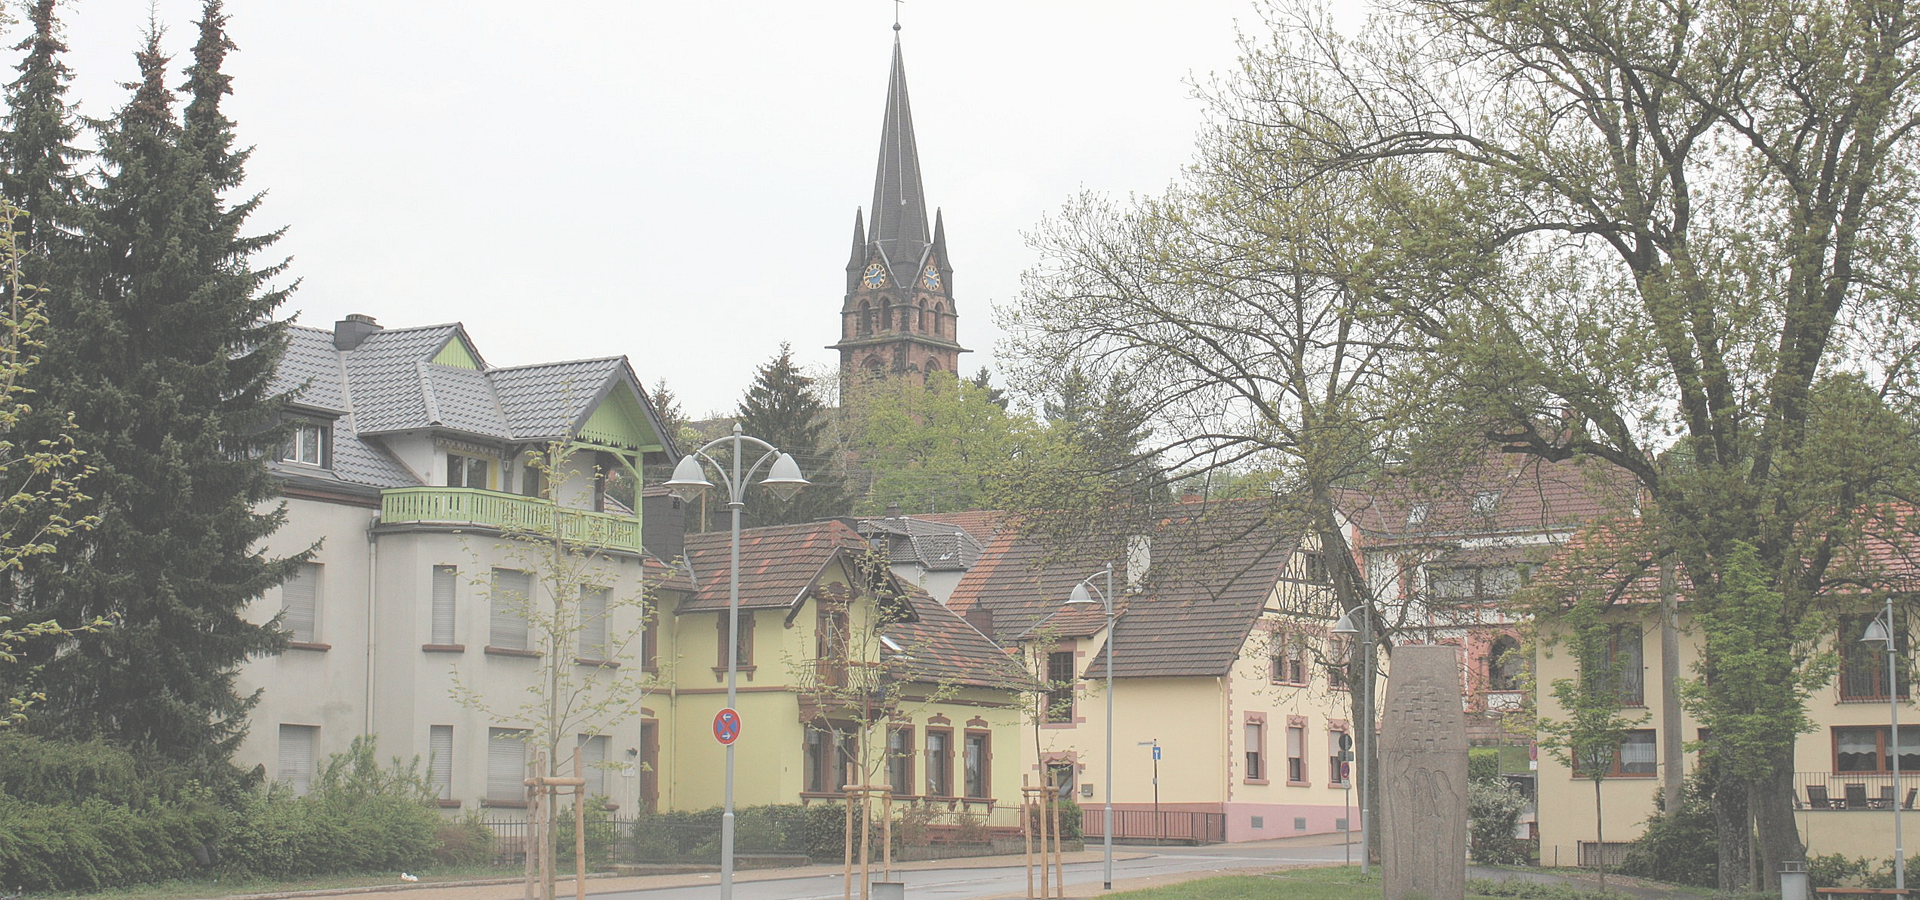 <b>Friedrichsthal, Saarland, Germany</b>